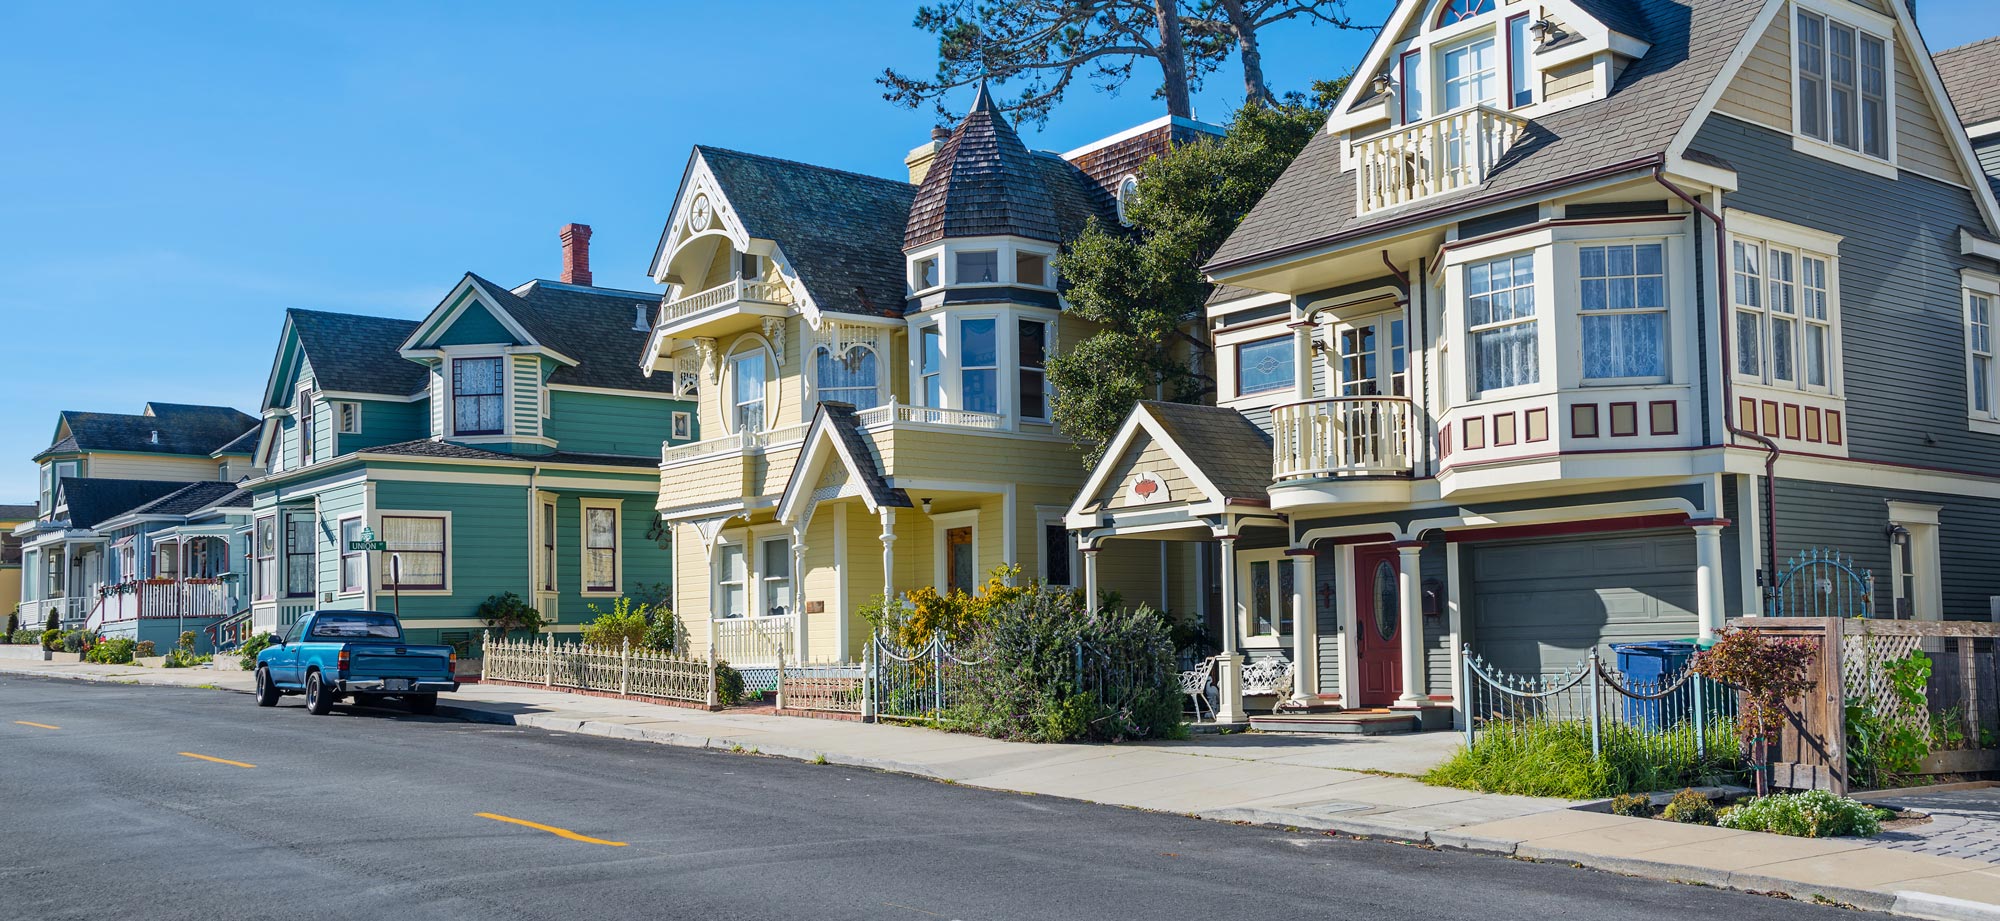 Houses in Monterey, California